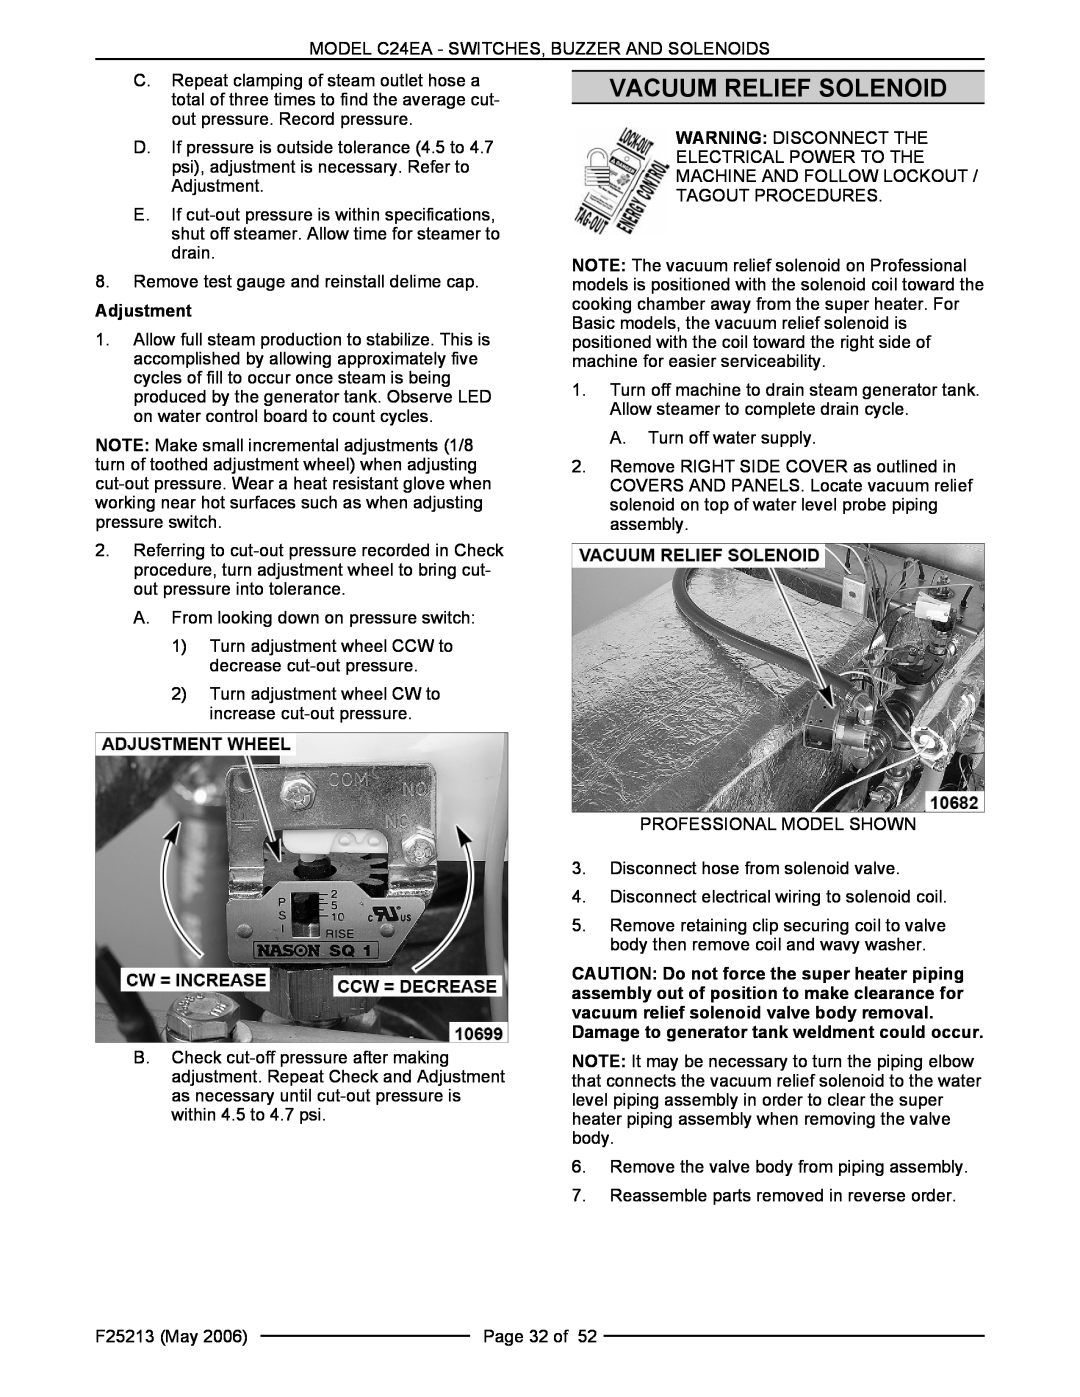 Vulcan-Hart C24EA5 480V BASIC Vacuum Relief Solenoid, Adjustment, Damage to generator tank weldment could occur 